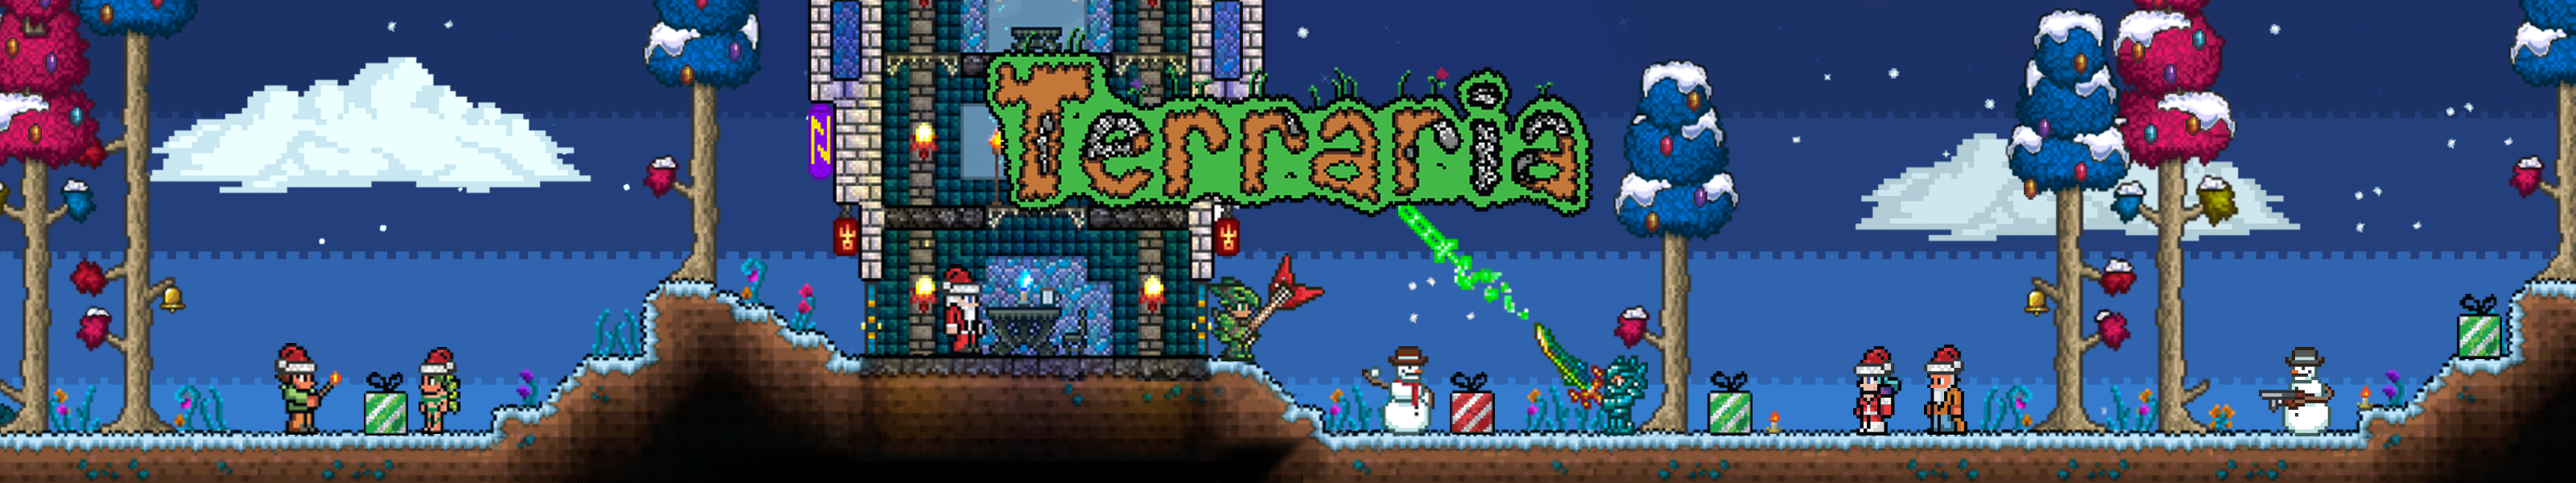 Terraria-Mobile-505-Games-1.2 Update-Key-Art